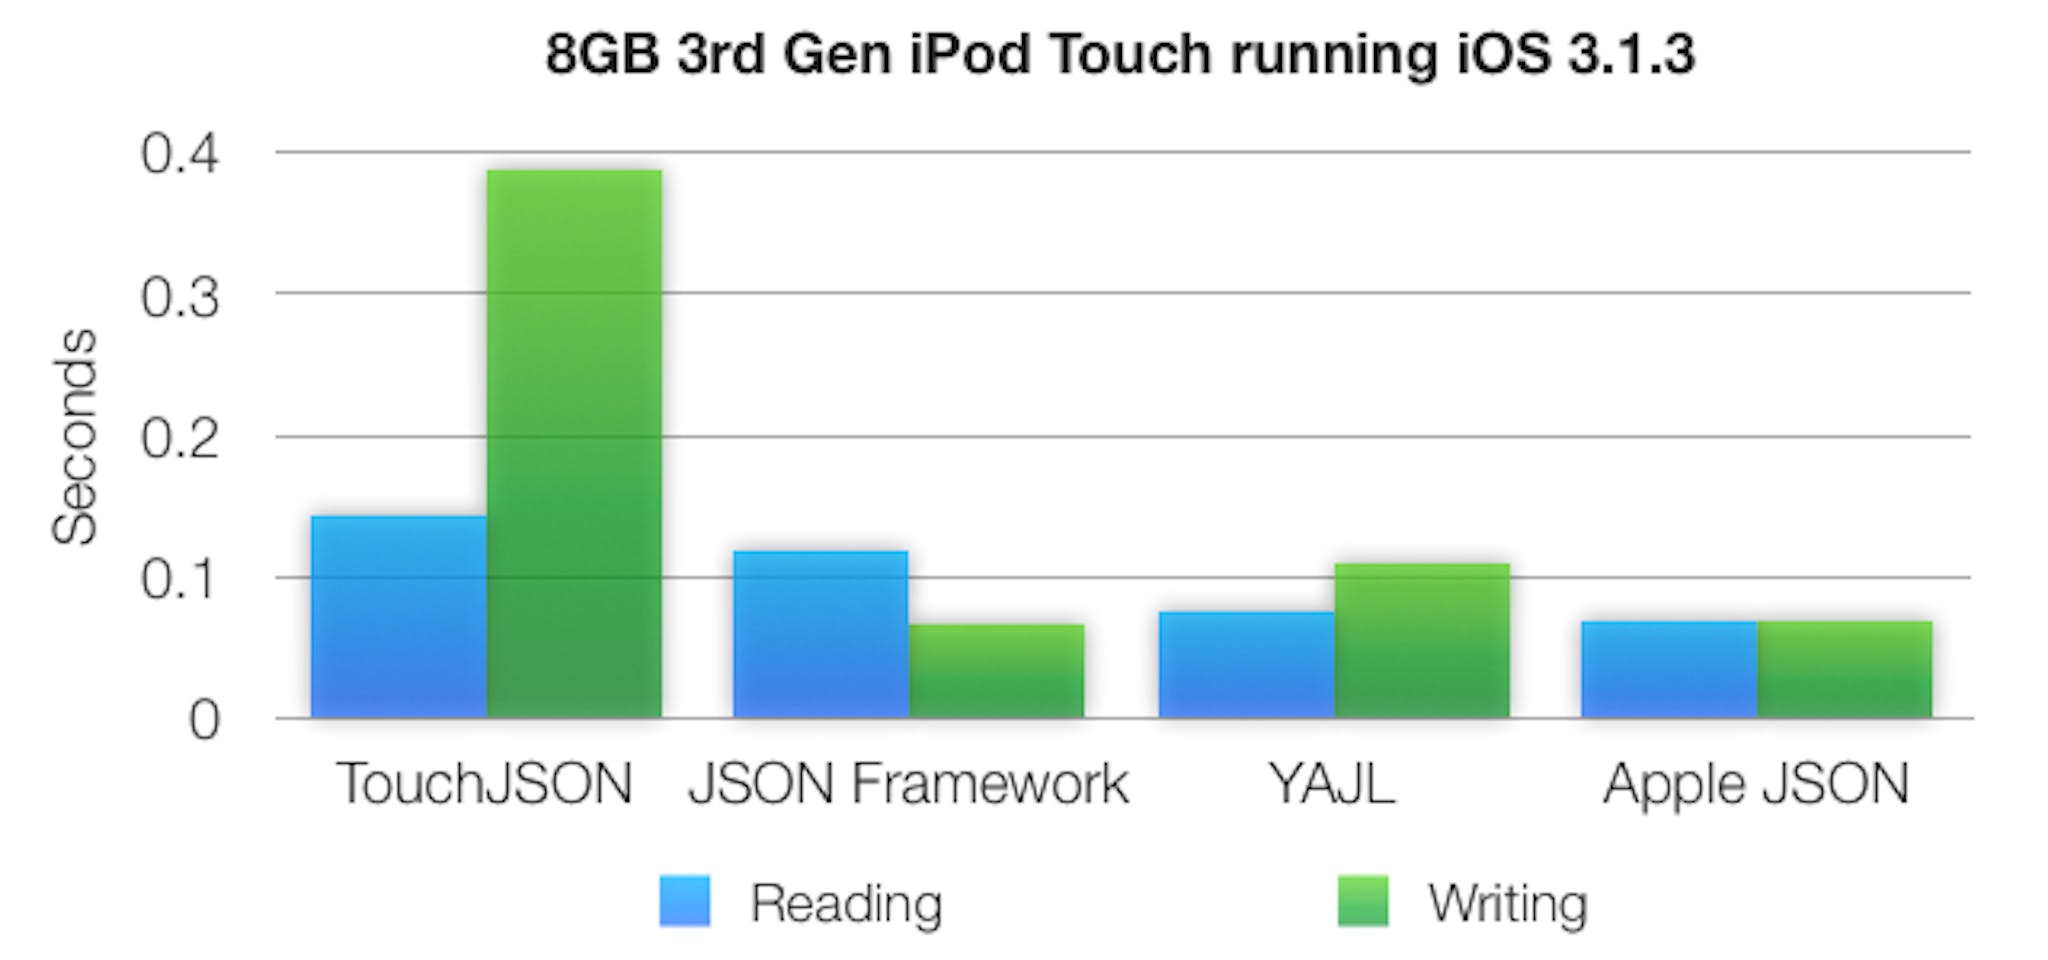 8GB 3rd Gen iPod Touch running iOS 3.1.3